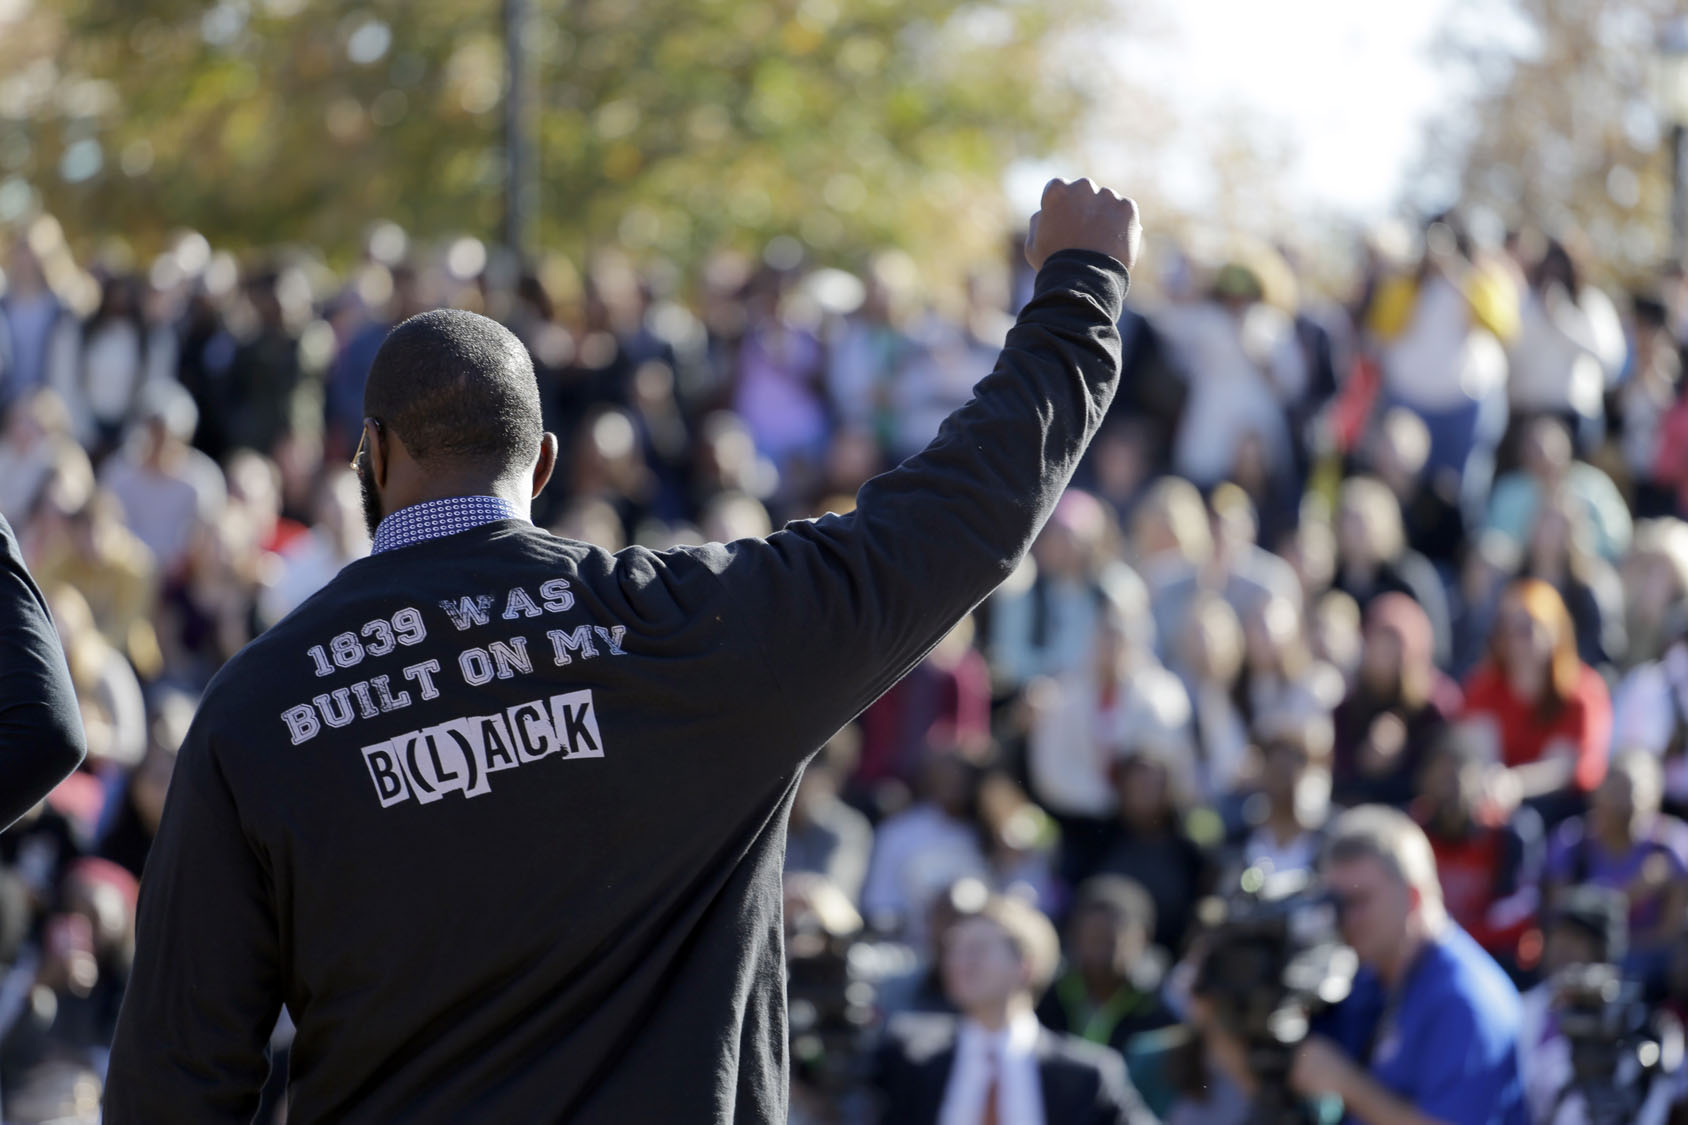 Black Student Revolt Against Racism Ousts 2 Top Officials at University of Missouri